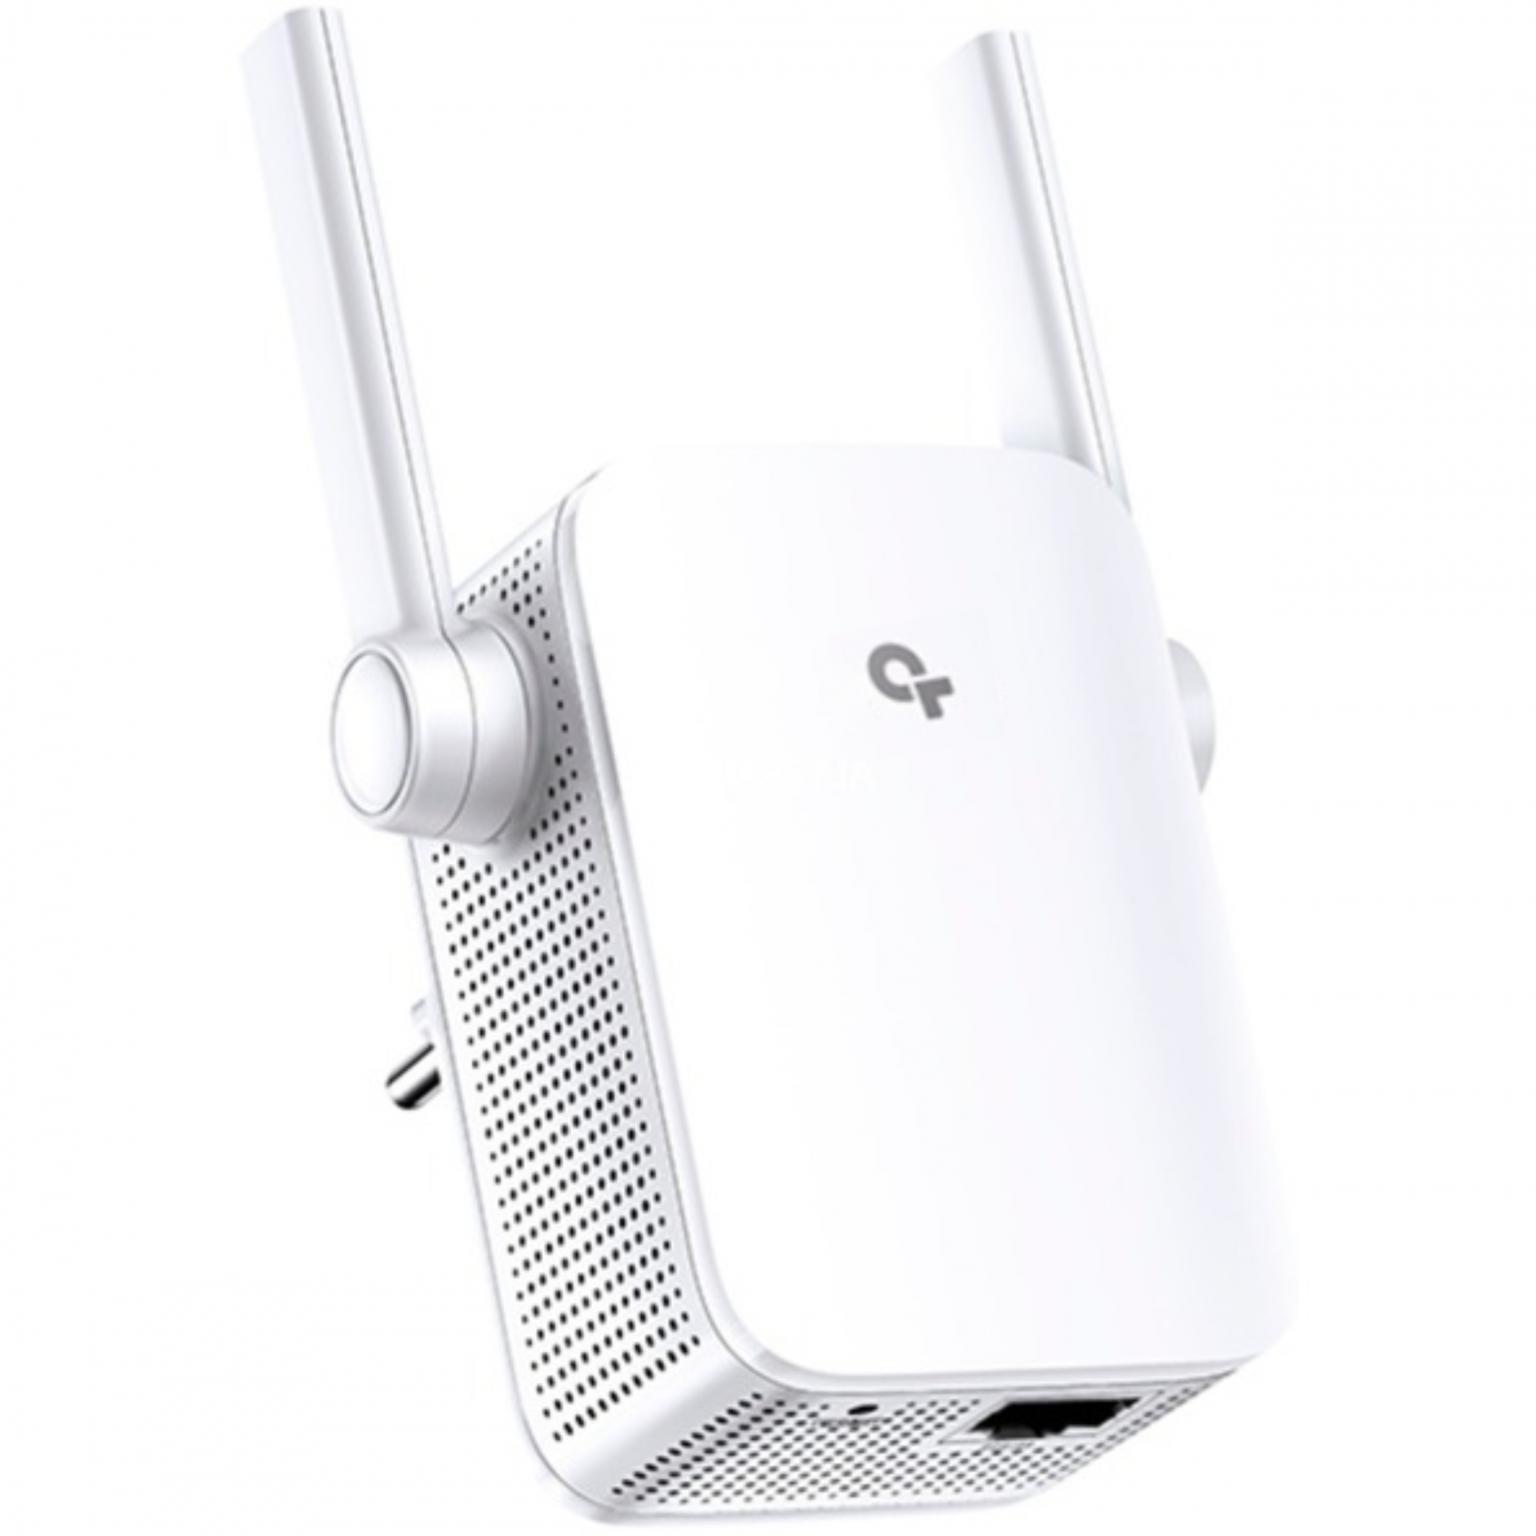 WiFi Repeater 300 Mbps WiFi Repeater, Merk: TP Link - TL-WA855RE, Voeding: Netstroom, Beveiliging: WPA2, WPA en WEP, Frequentieband: 2.4GHz, Snelheid: Tot 300 Mbps, poorten: 1.